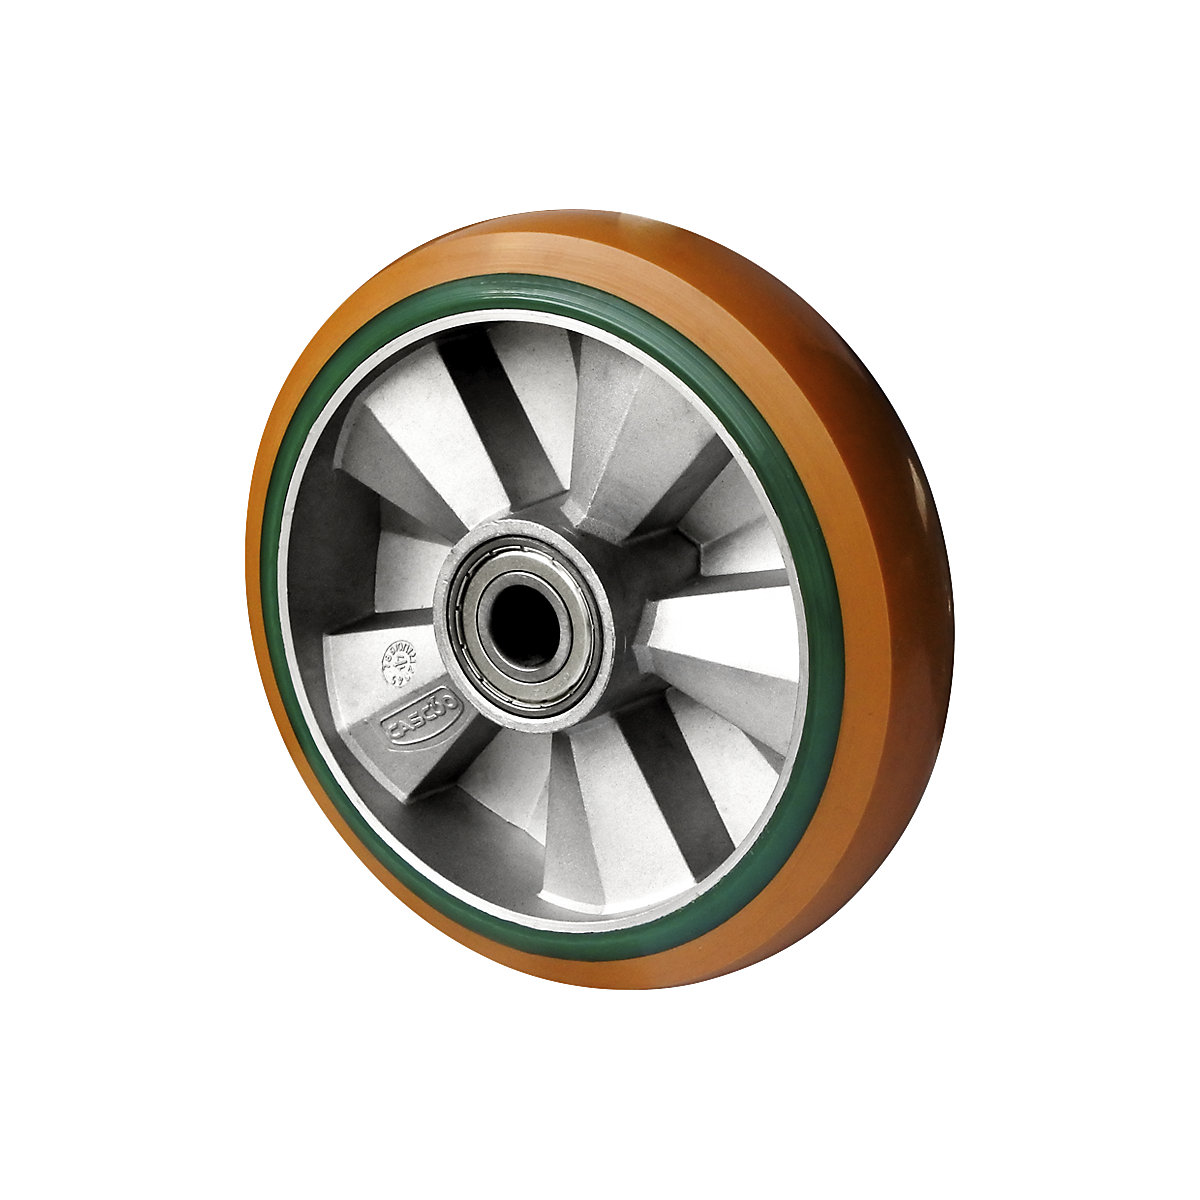 PU/PU elastic wheel, brown / green